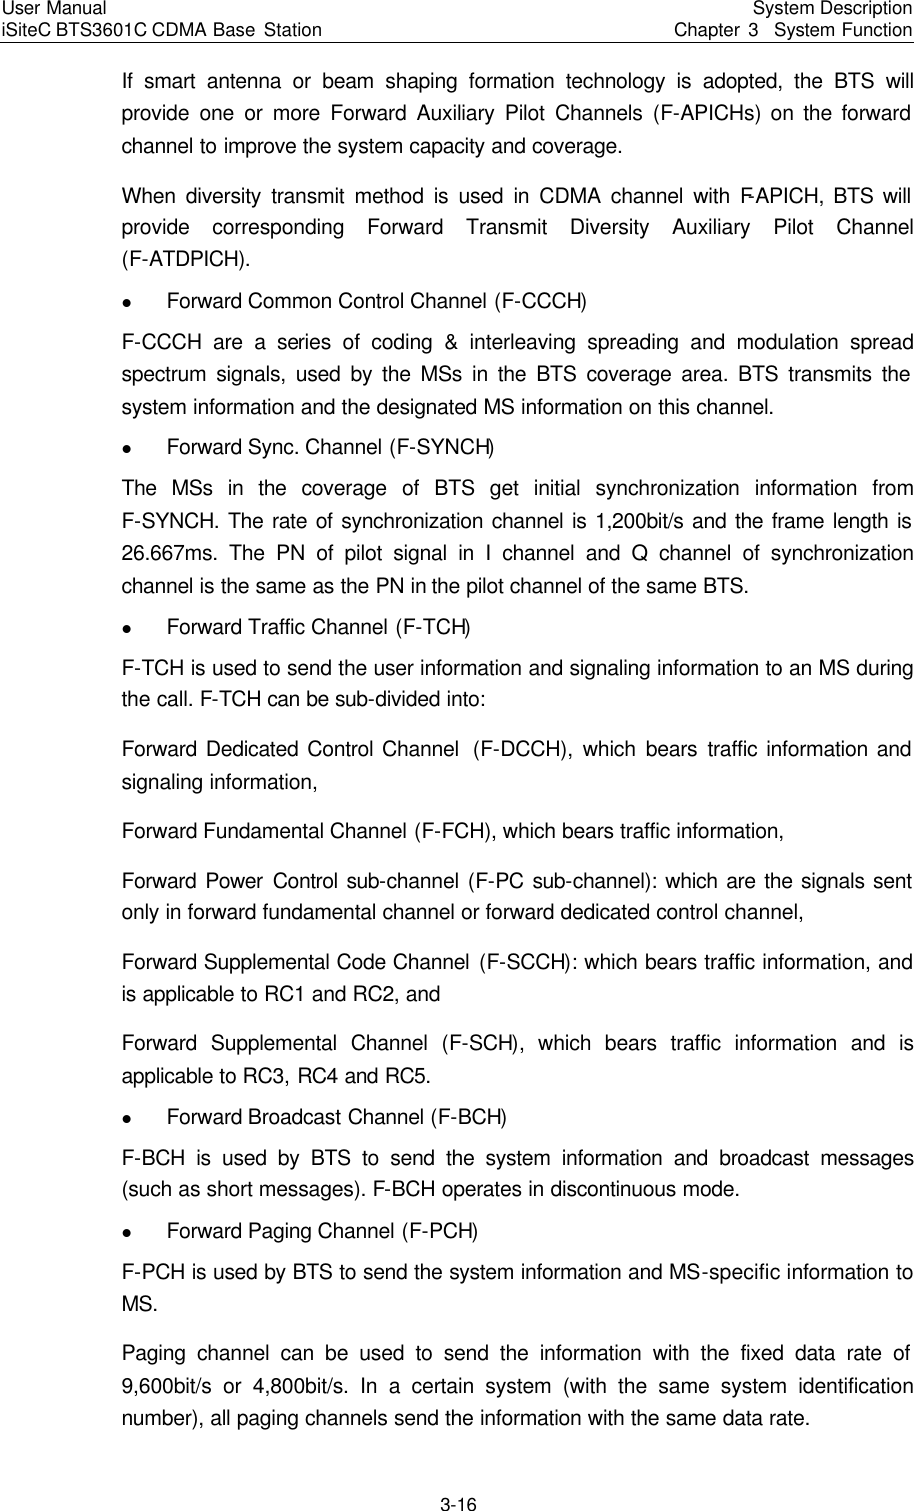 Page 38 of Huawei Technologies BTS3601C-800 CDMA Base Station User Manual 3